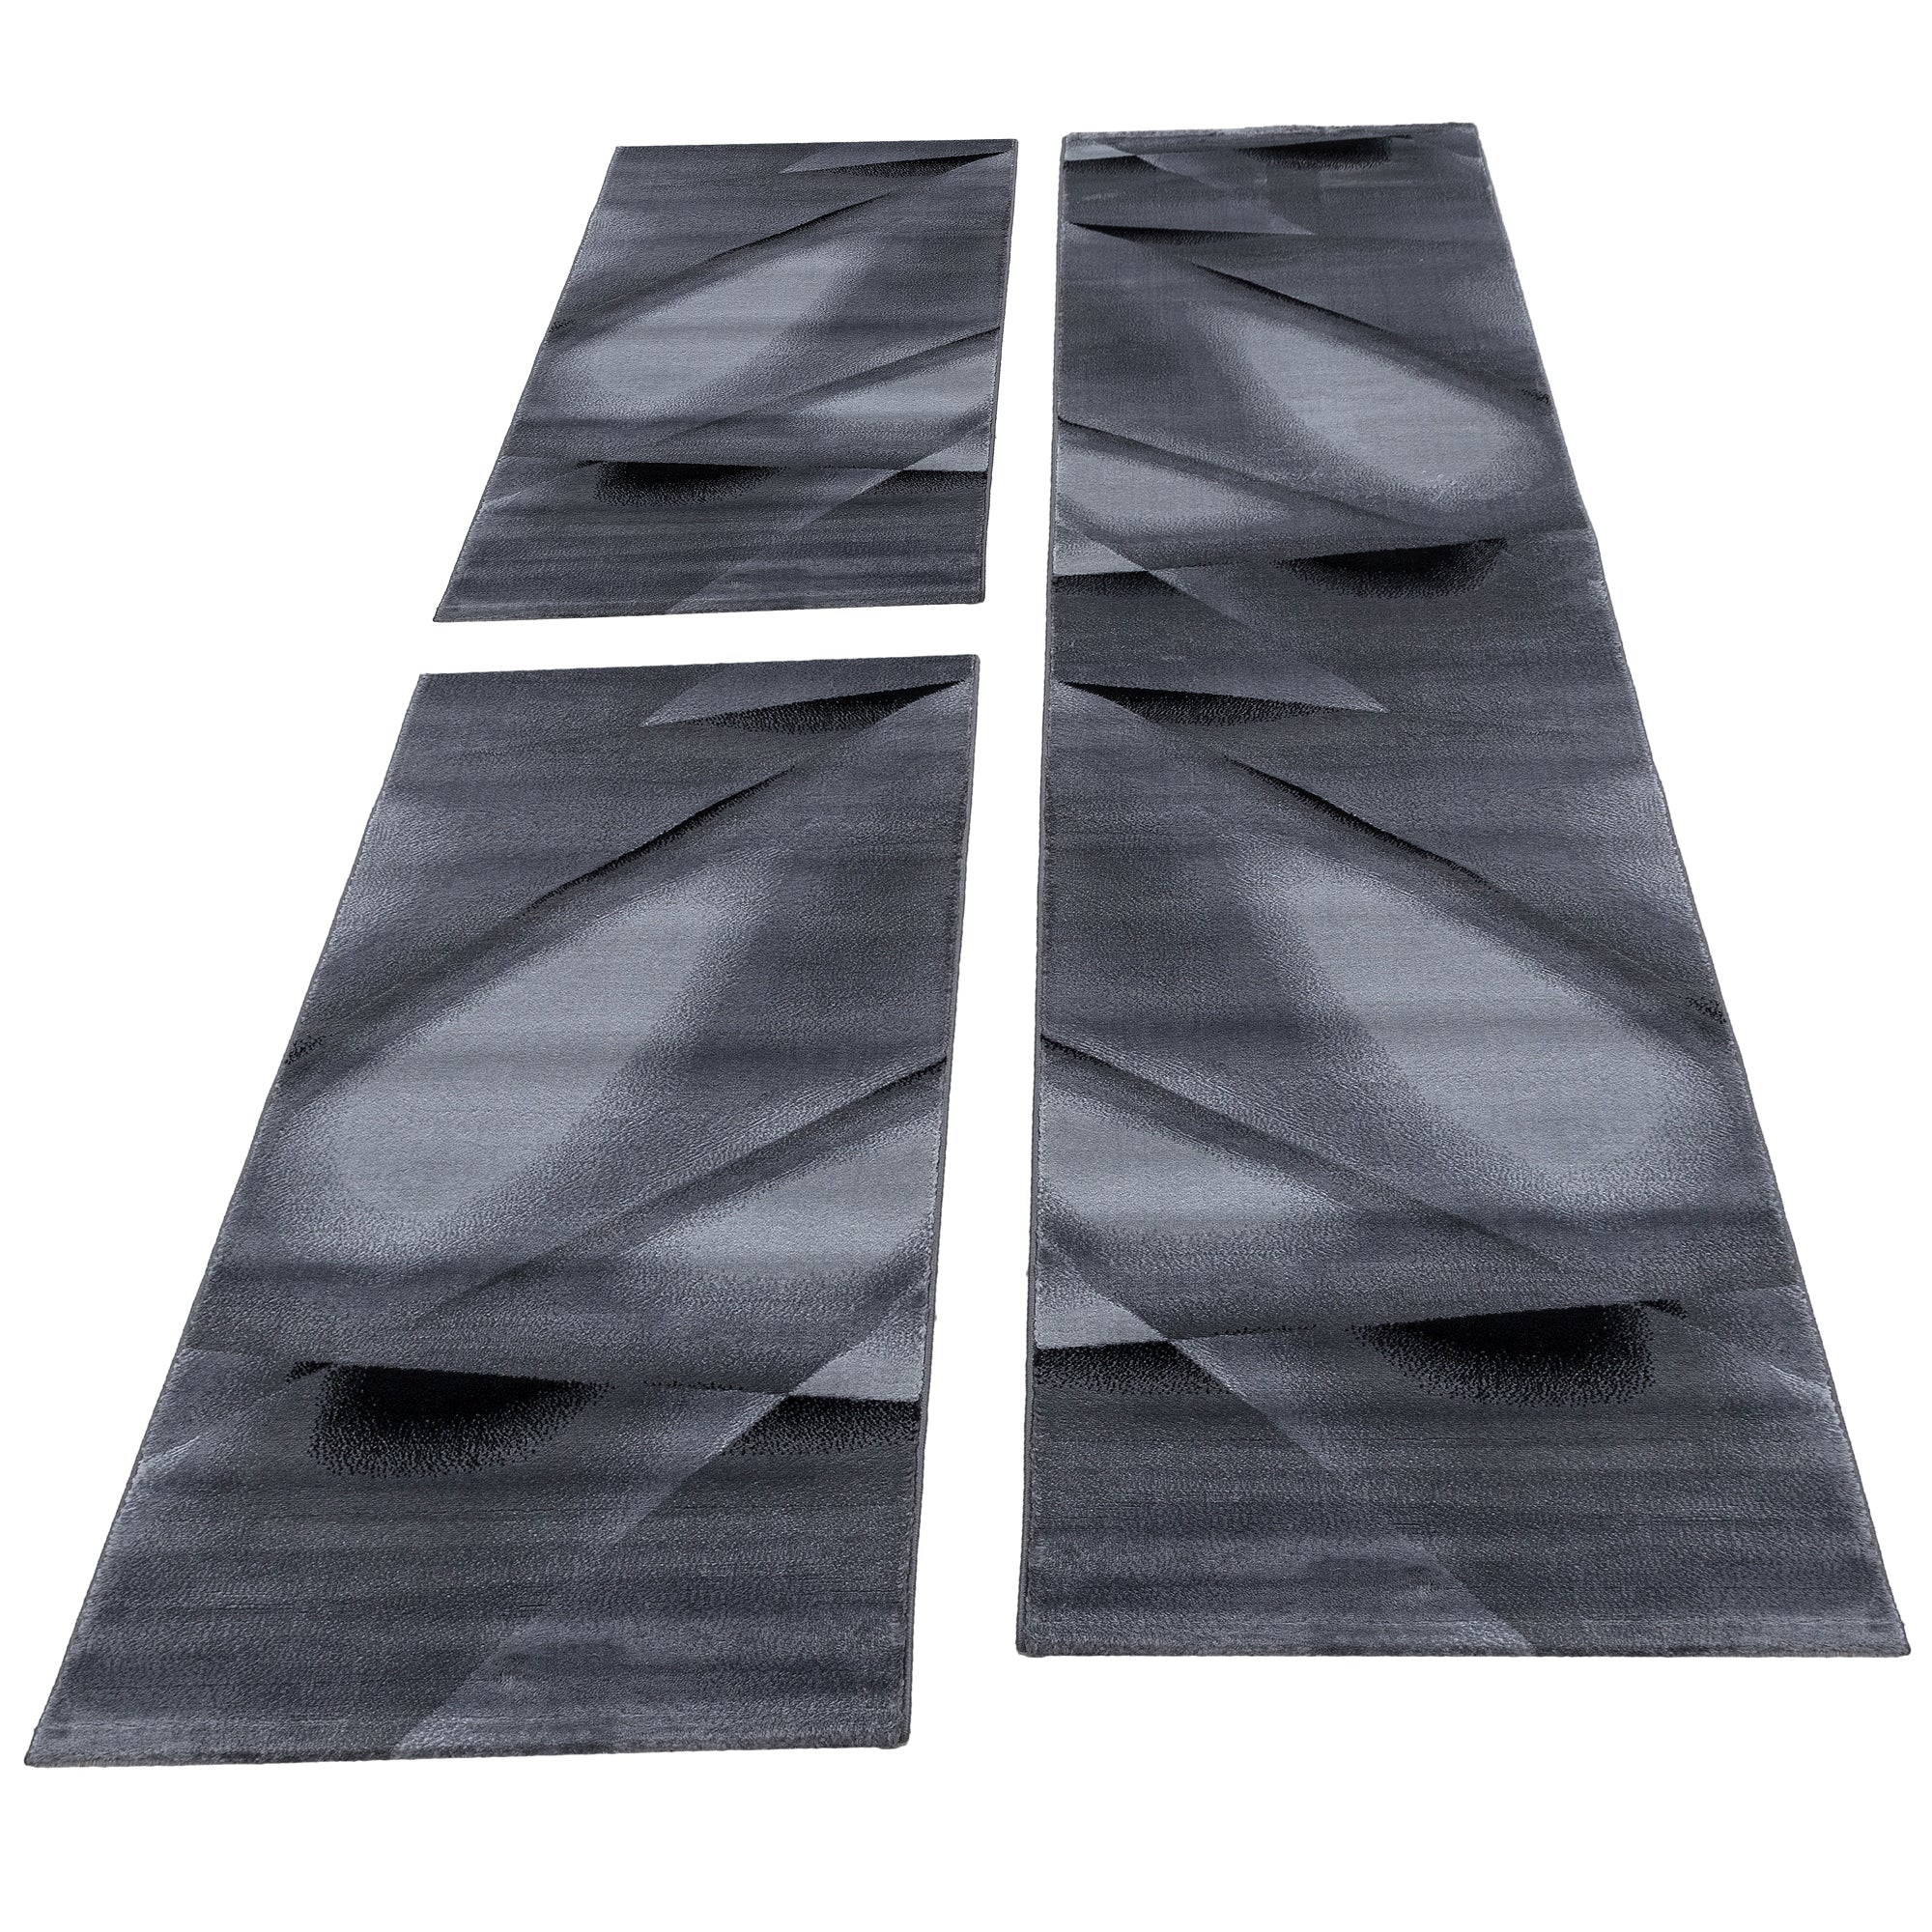 Teppich Läufer Set Bettumrandung Kurzflor Teppiche Schwarz meliert 3 Teile